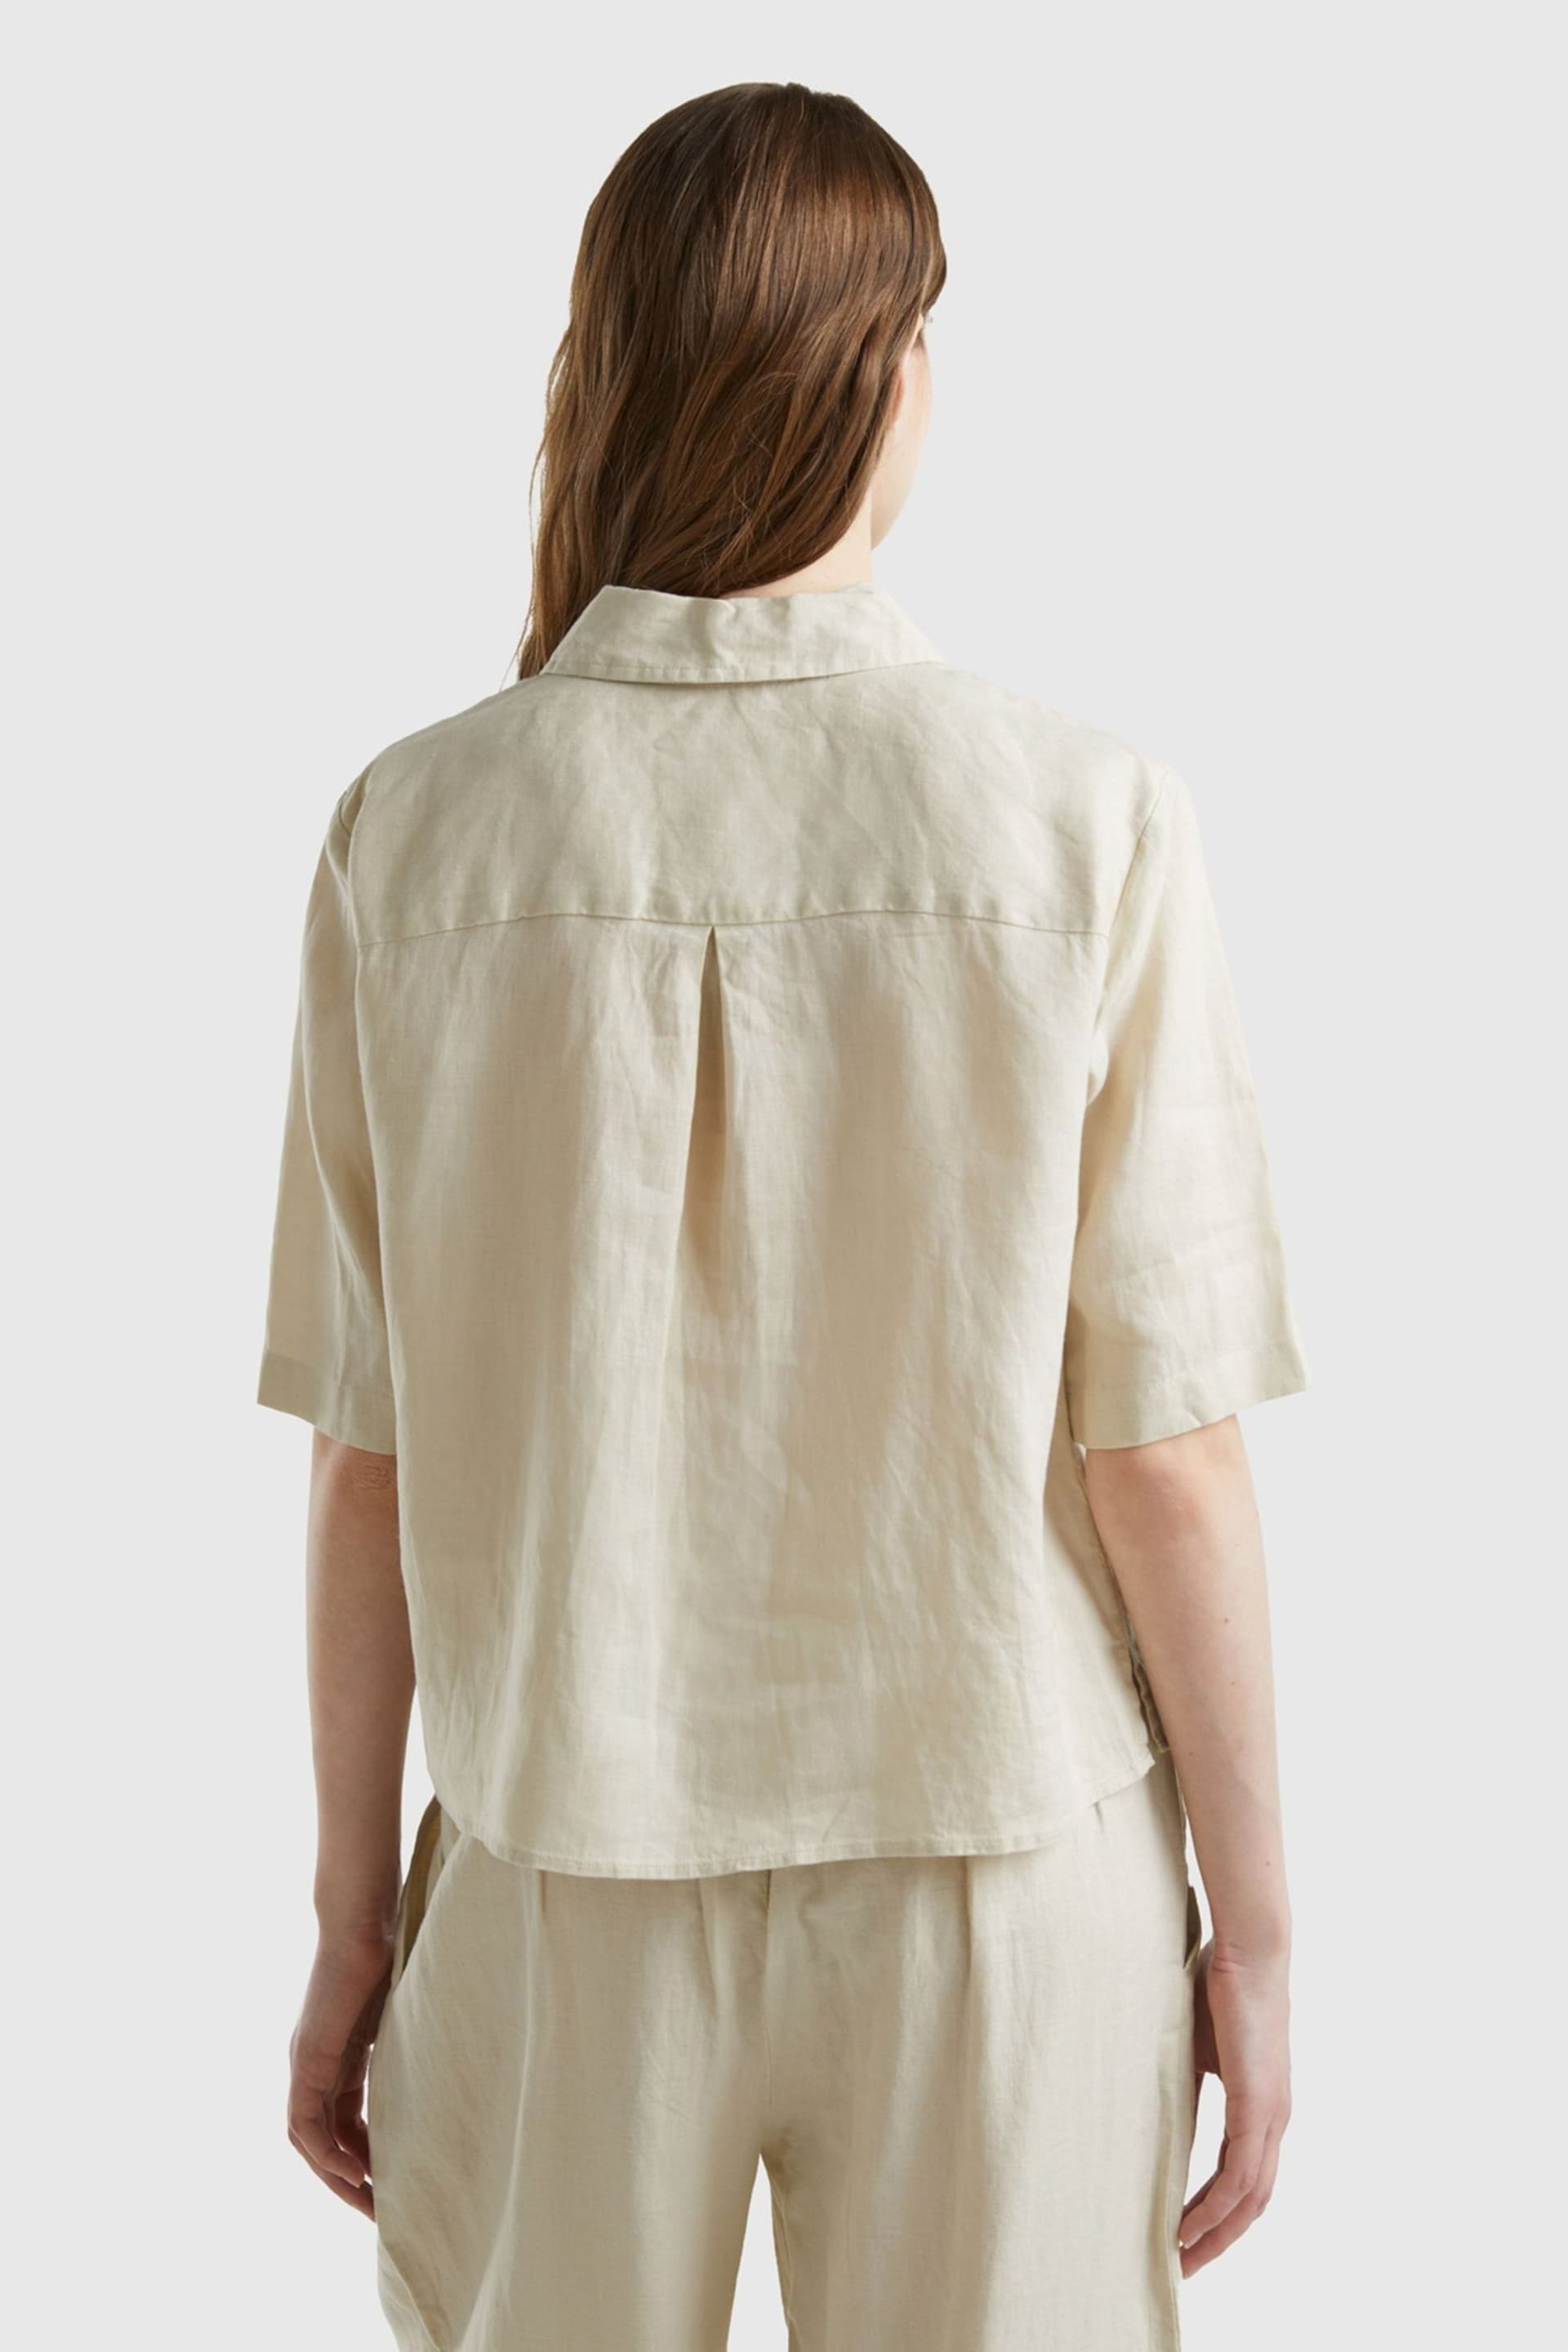 Benetton Linen Shirt - Image 2 of 3